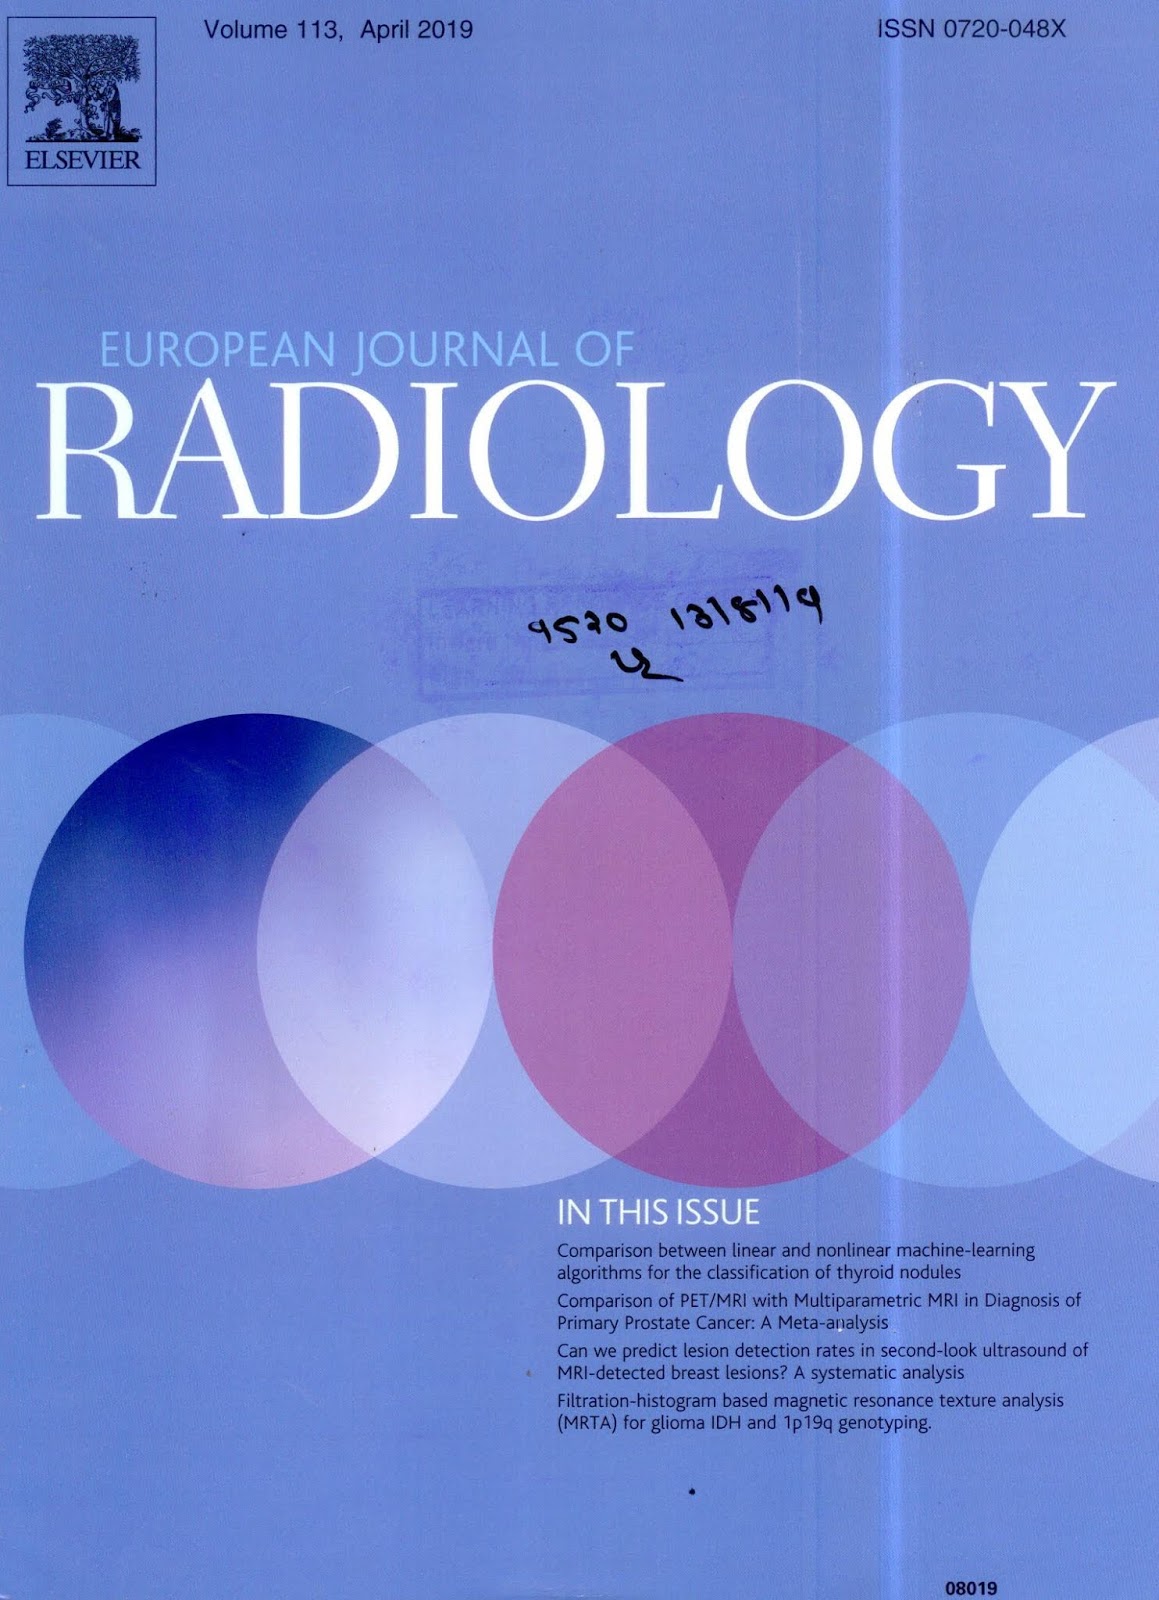 https://www.ejradiology.com/issue/S0720-048X(19)X0003-0